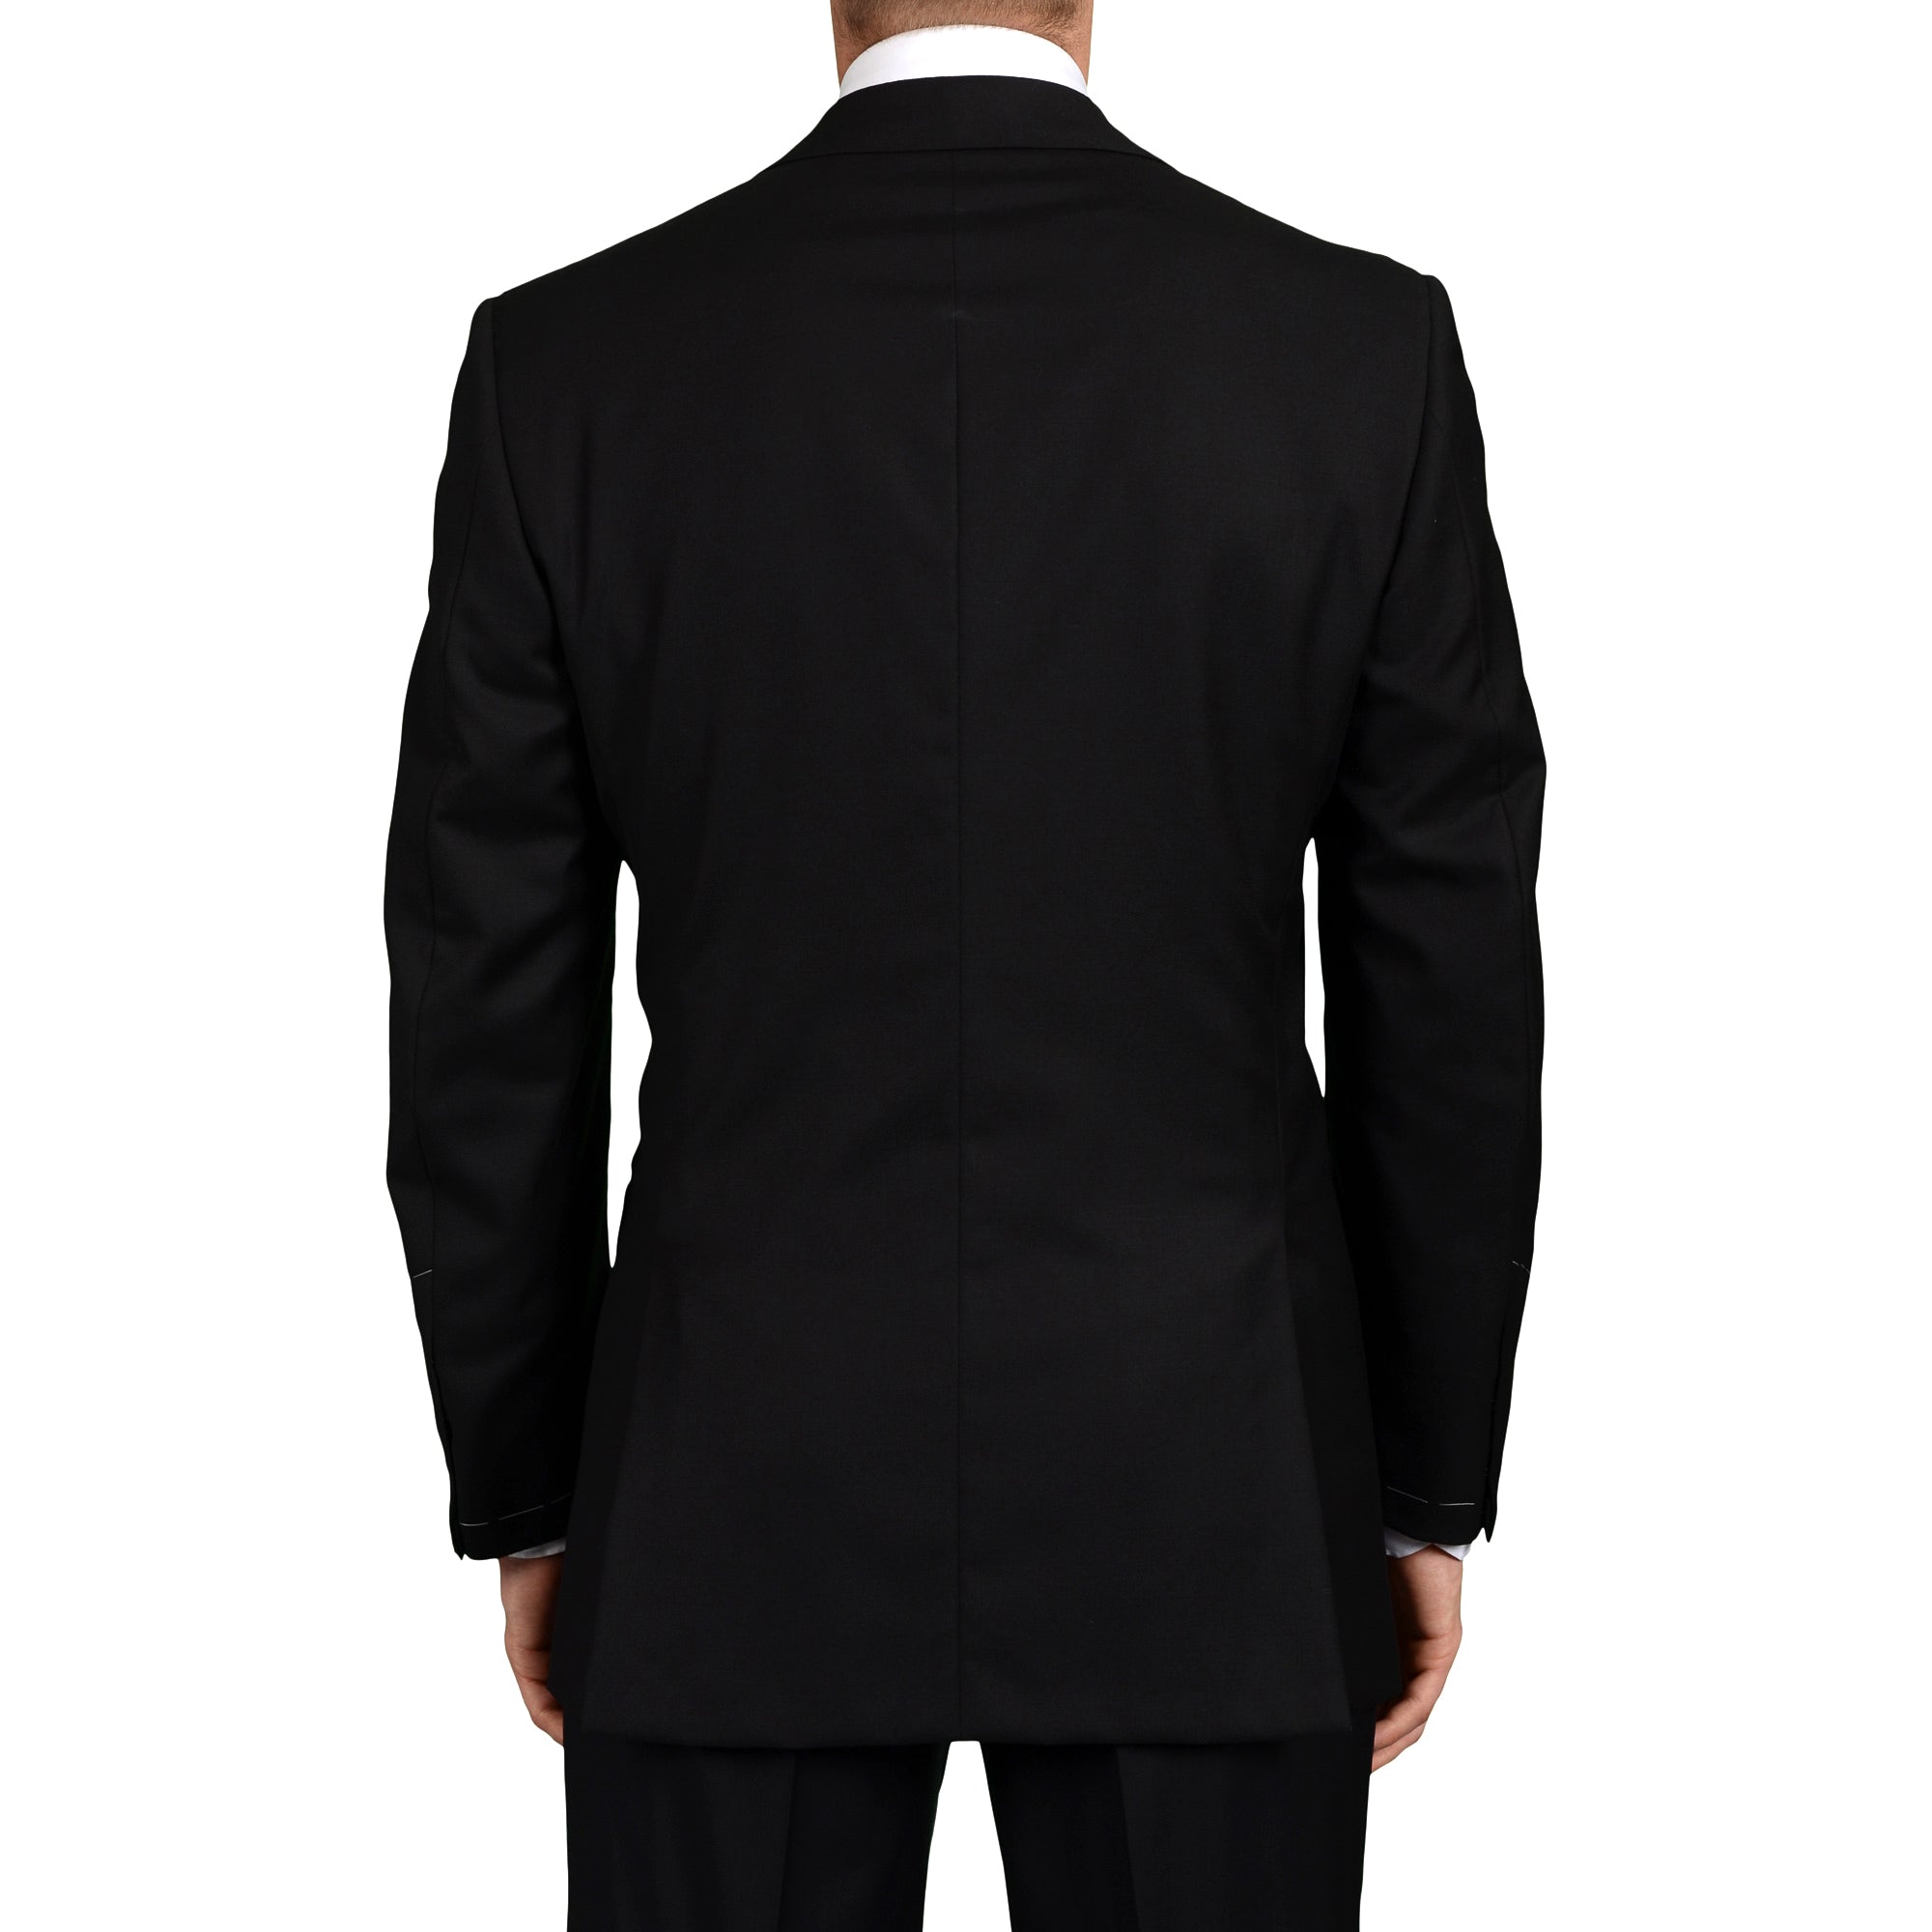 D'AVENZA for FERU Handmade Black Wool Elegant Suit EU 50 NEW US 40